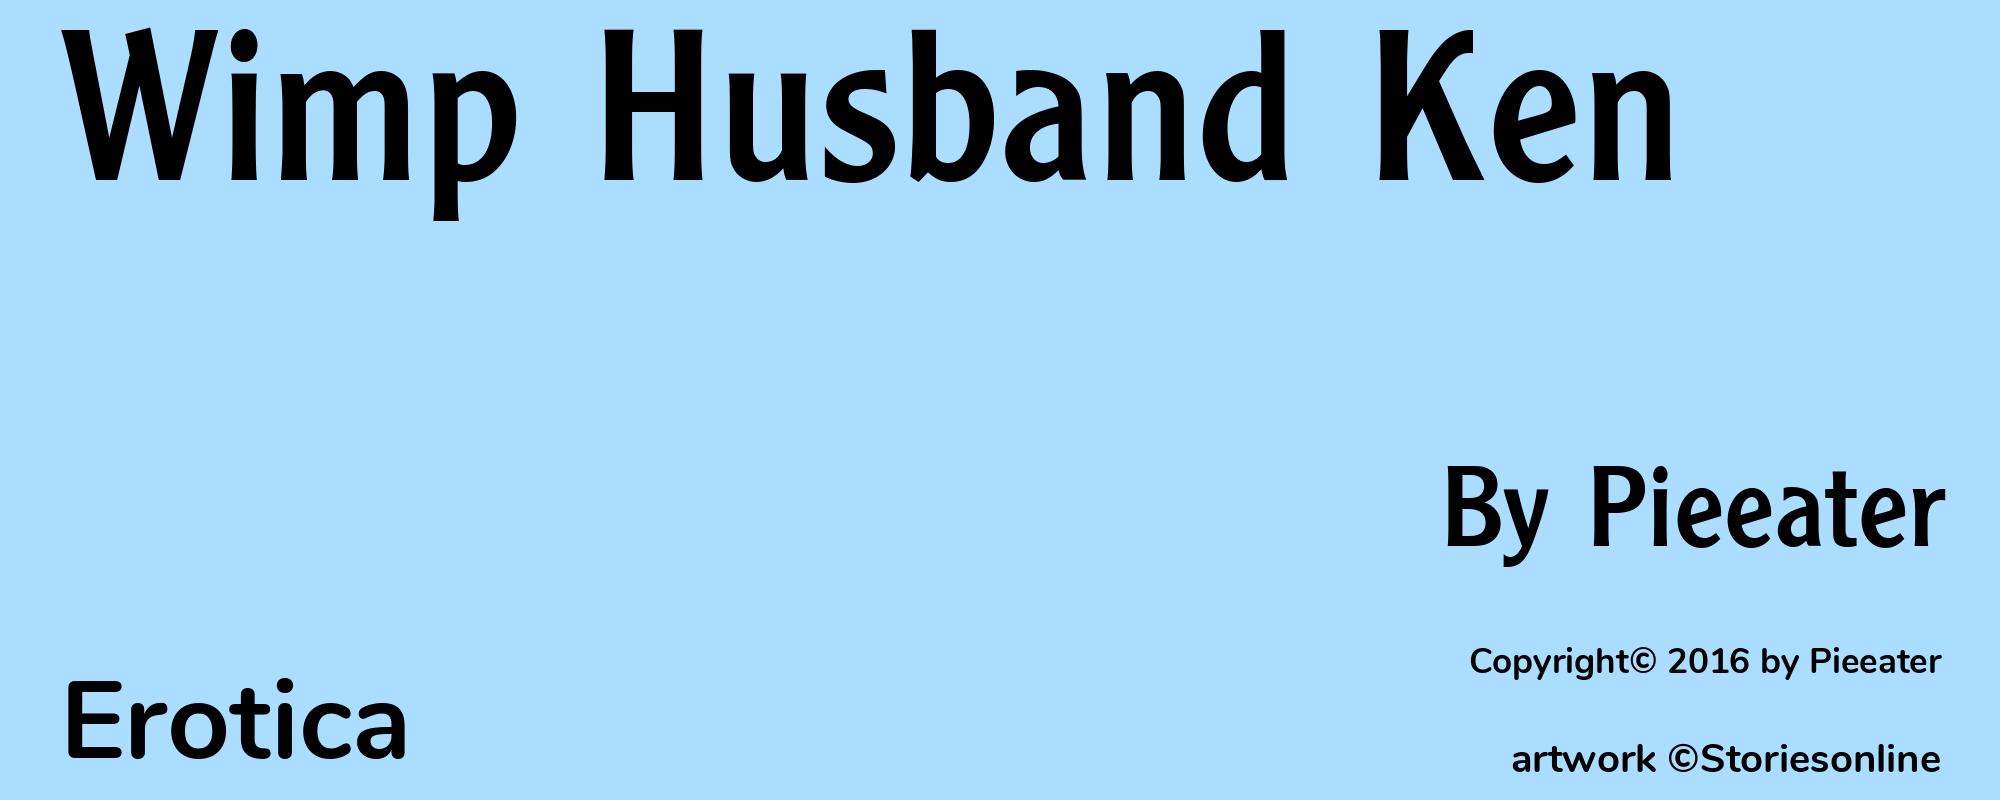 Wimp Husband Ken - Cover